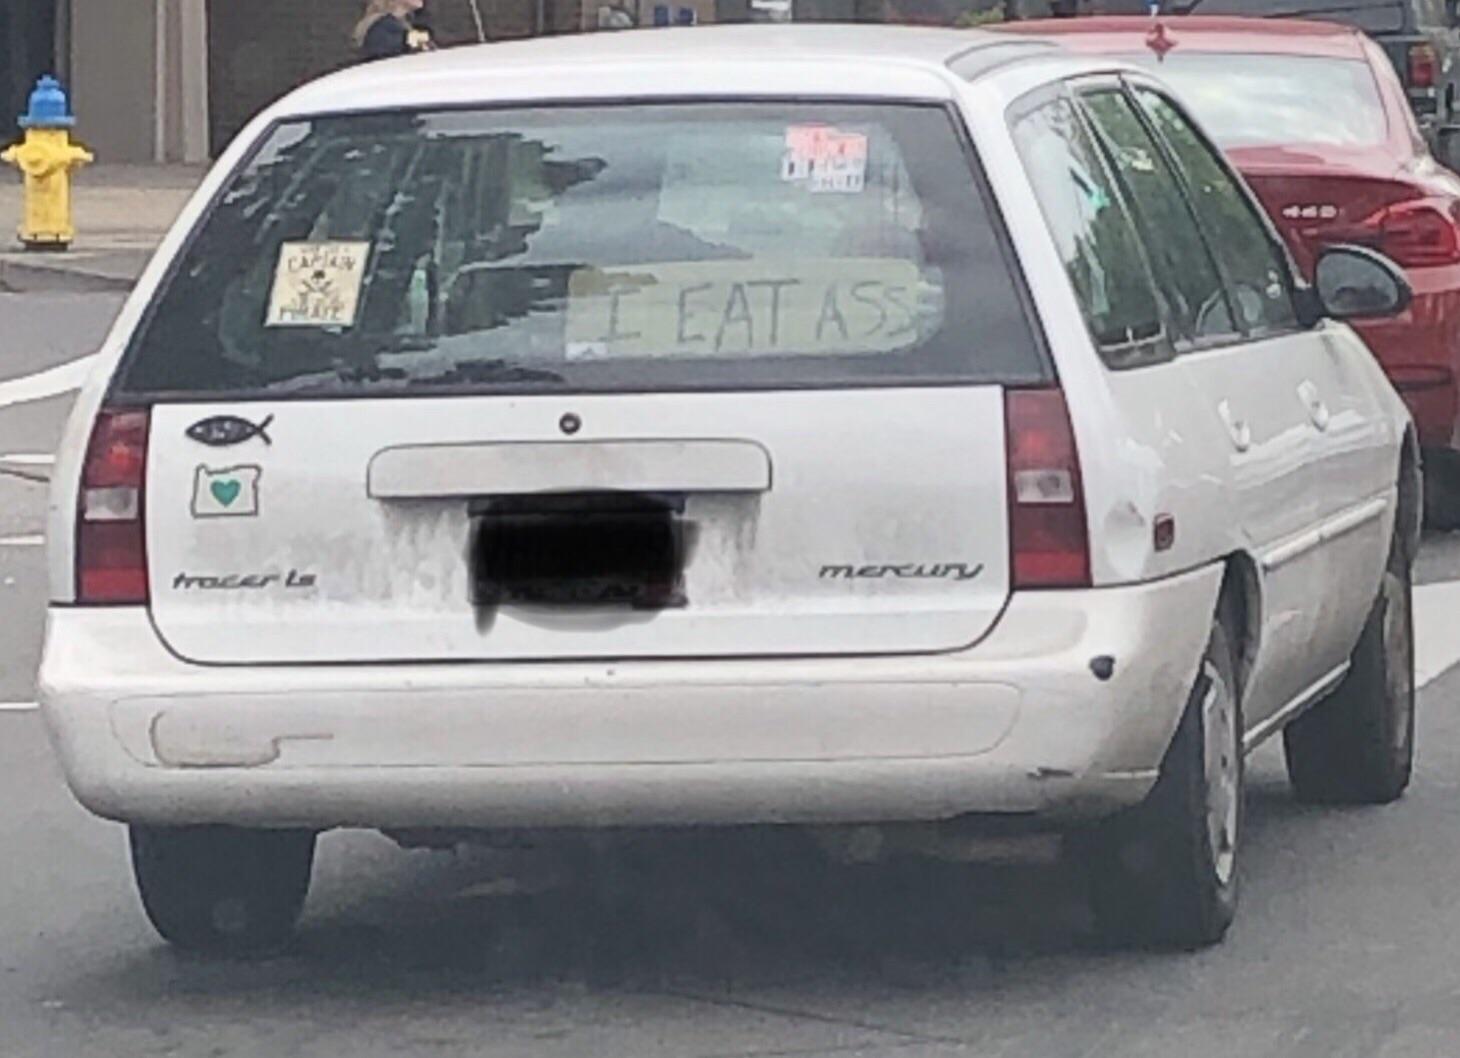 vehicle registration plate -  i Eat Ass